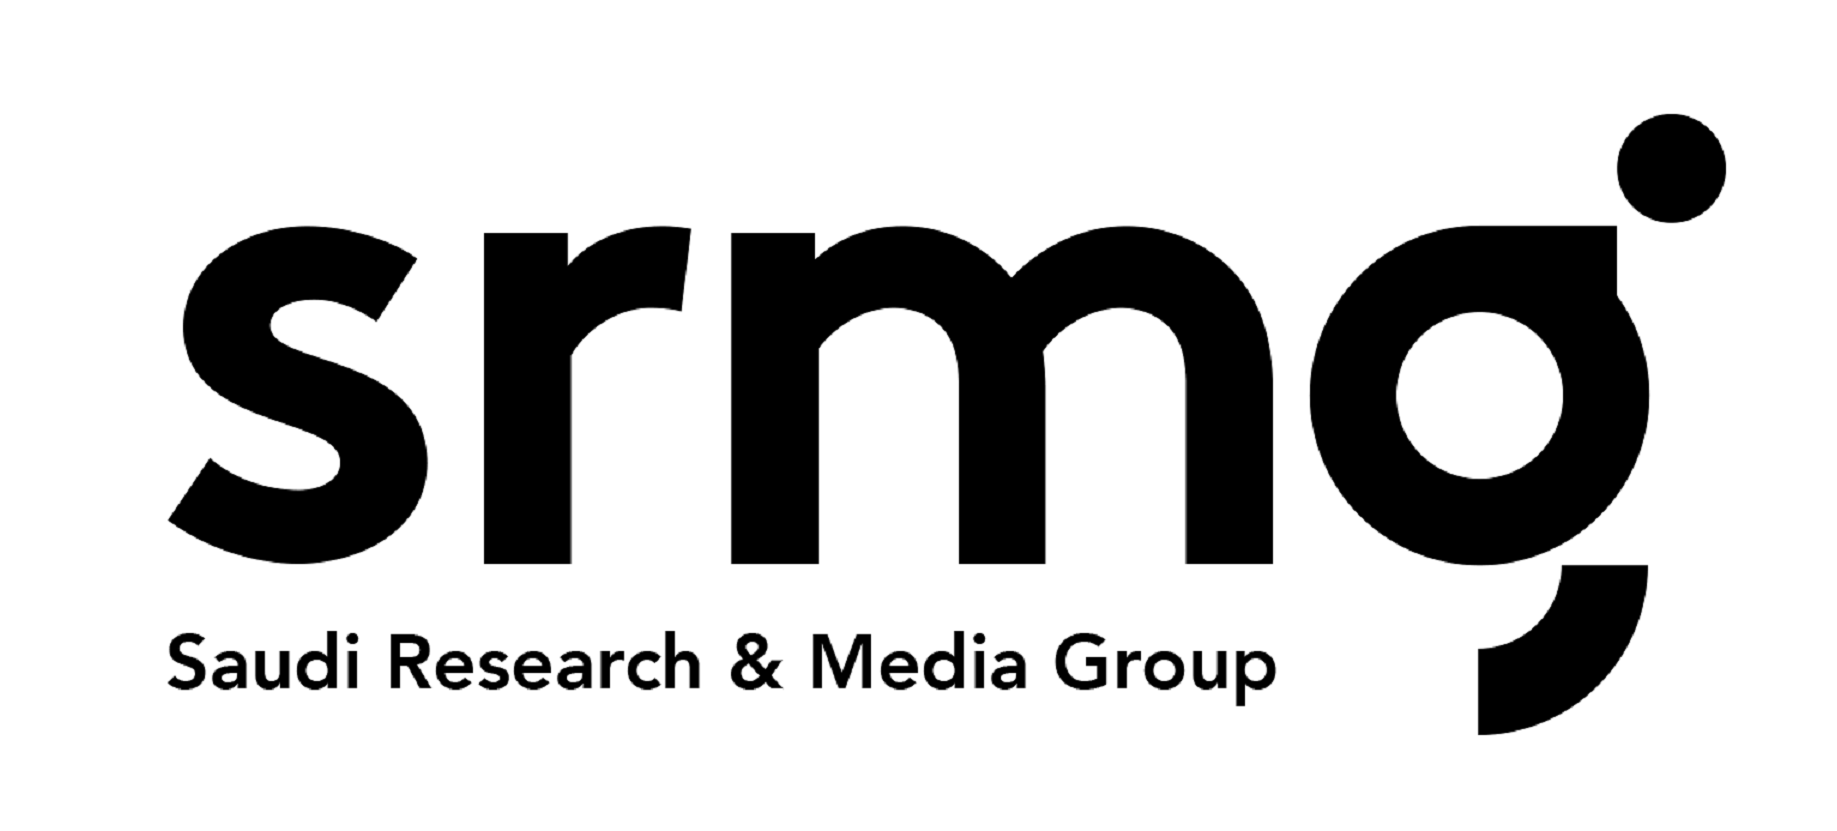 Saudi Research & Media Group Appoints Saudi Media Company as Exclusive Media Representative